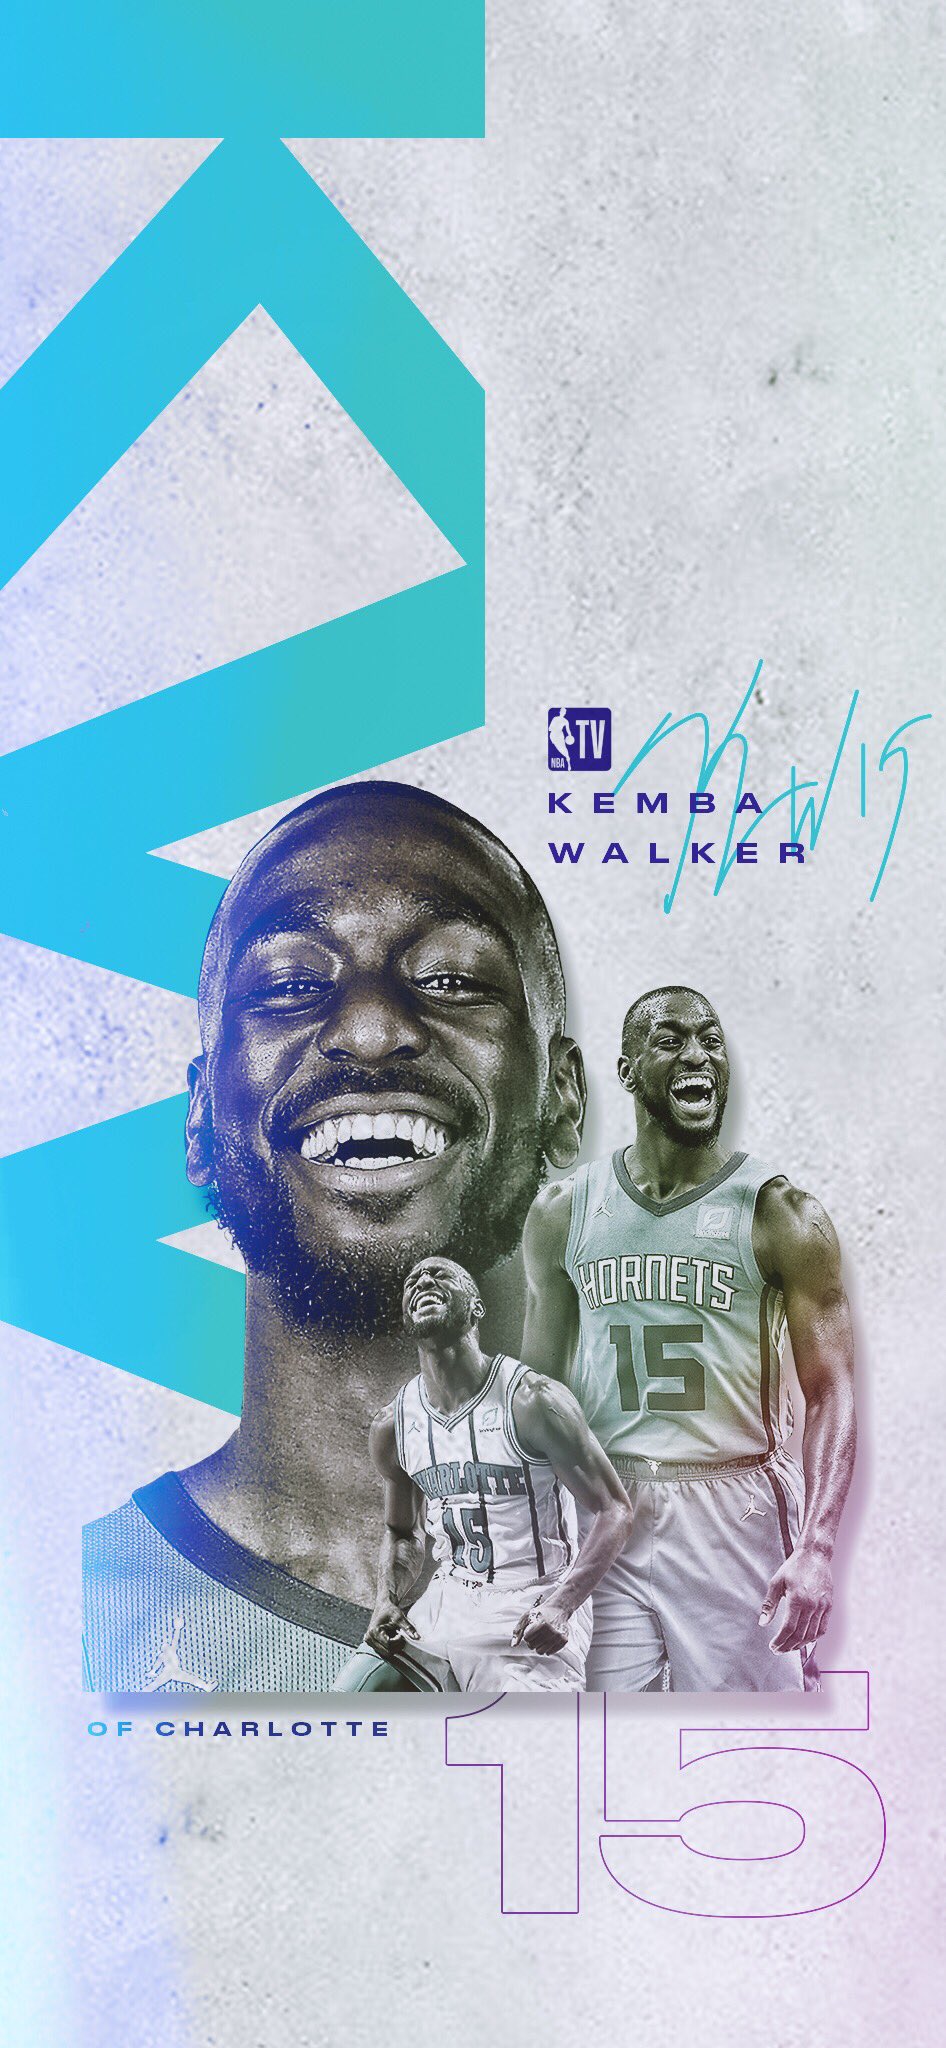 Kemba Walker wallpaper  Nba pictures Basketball wallpaper Paul walker  quotes